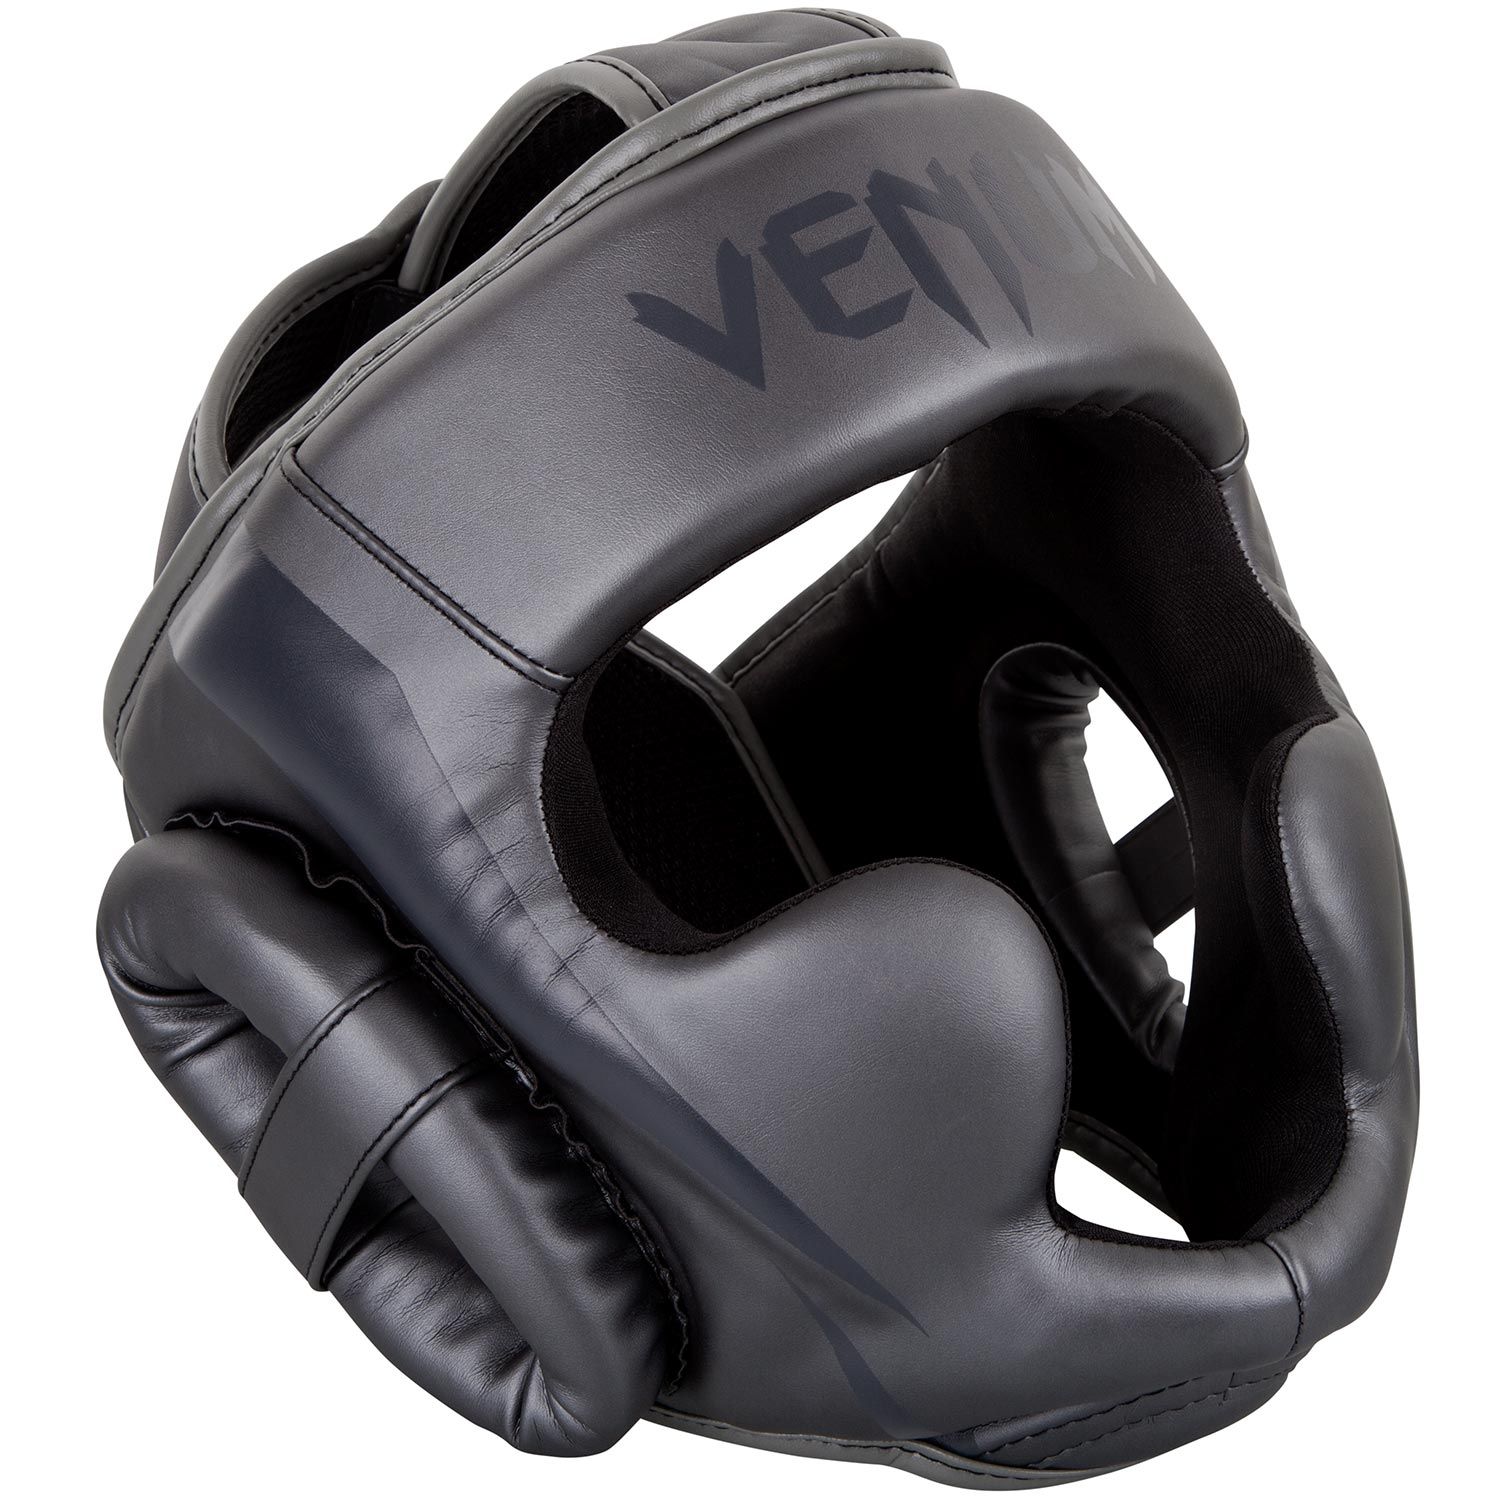 Venum Elite Kopfschutz - Grau/Grau - Taille Unique